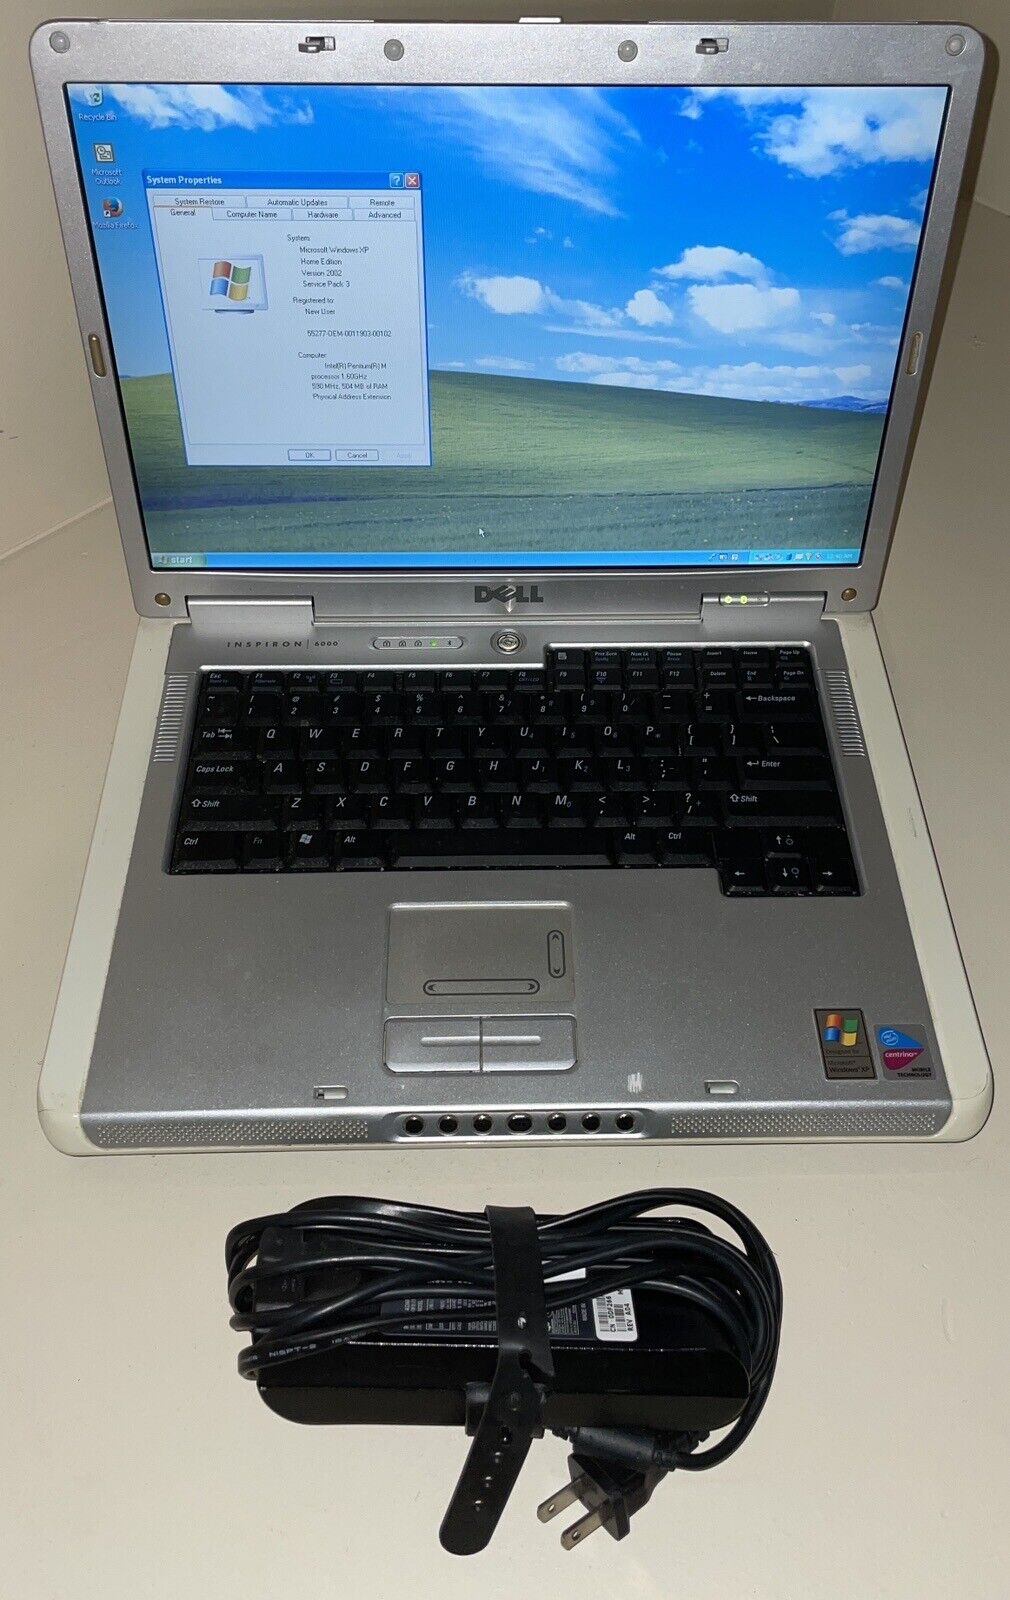 Dell Inspiron 6000 Retro Laptop - Pentium M 1.6ghz | 512mb RAM | 80gb HDD  WinXP